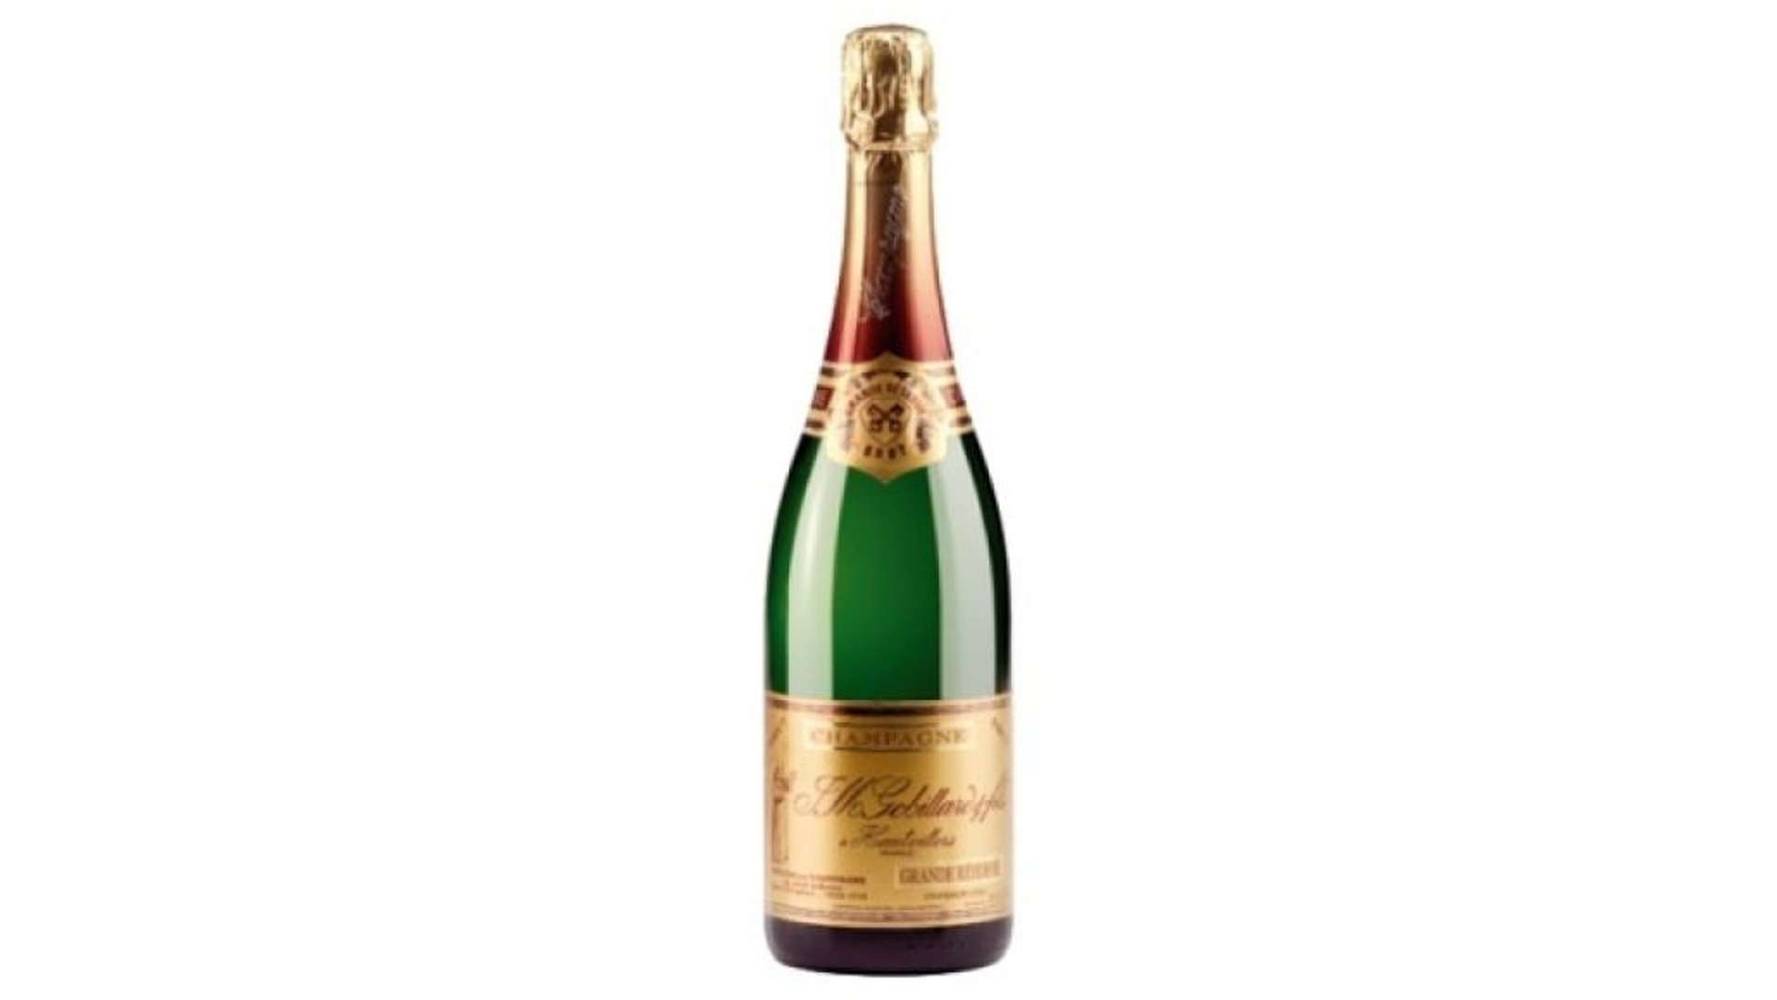 Jm. Gobillard & Fils - Champagne 1er cru brut AOP (750 ml)